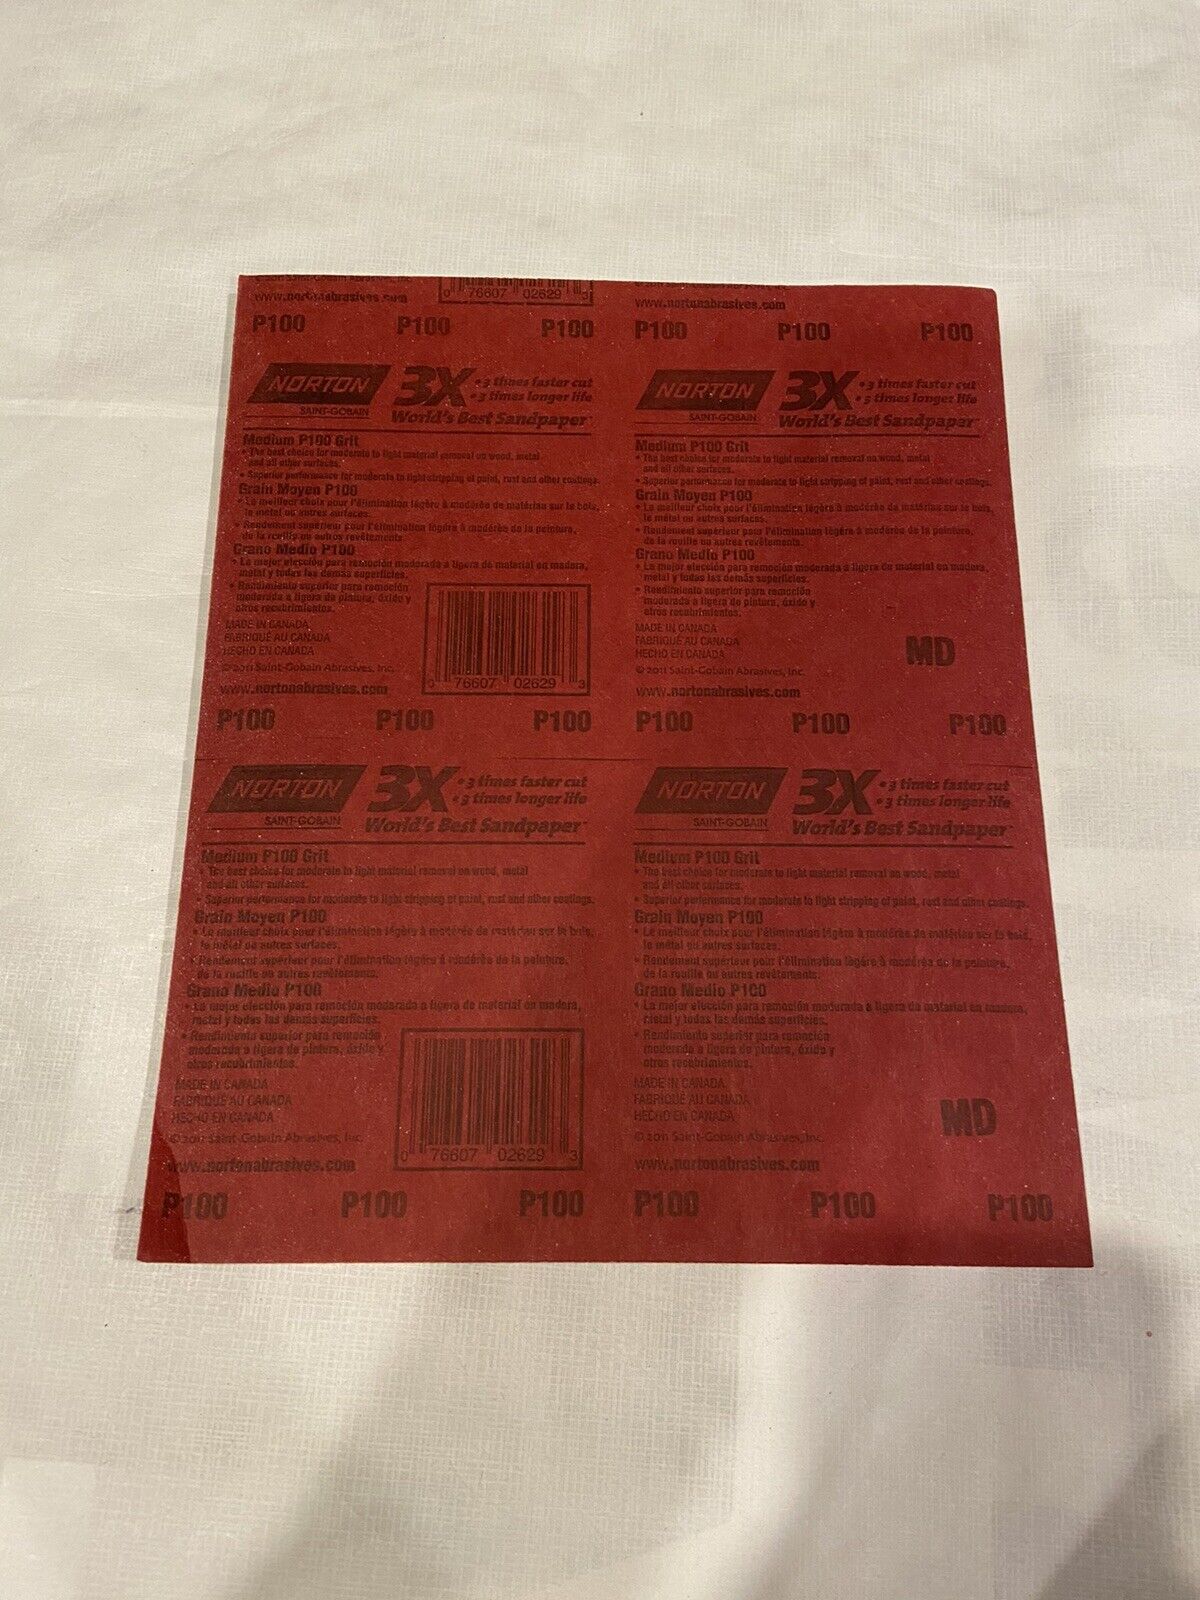 Norton 3x Medium P100 Grit Set Of 20 Sheets Sand Paper